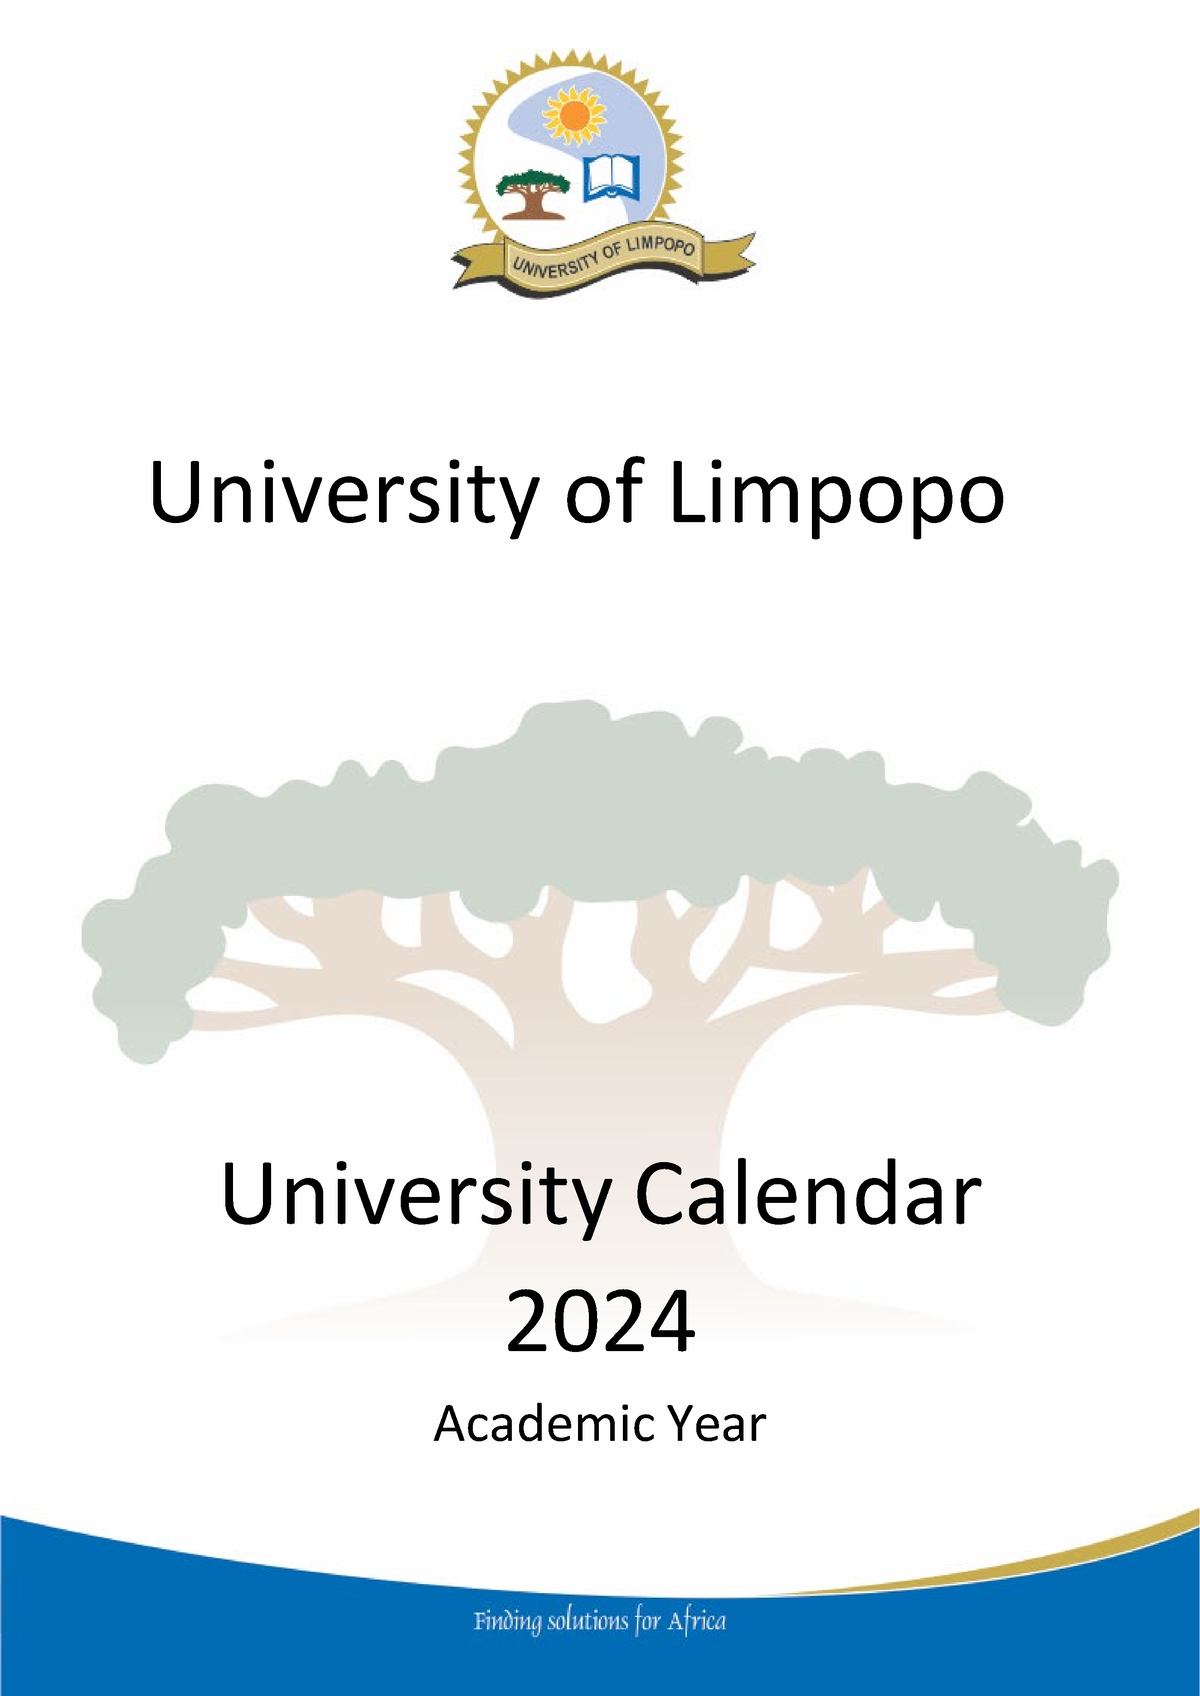 University Academic Calendar 20241 University of Limpopo University